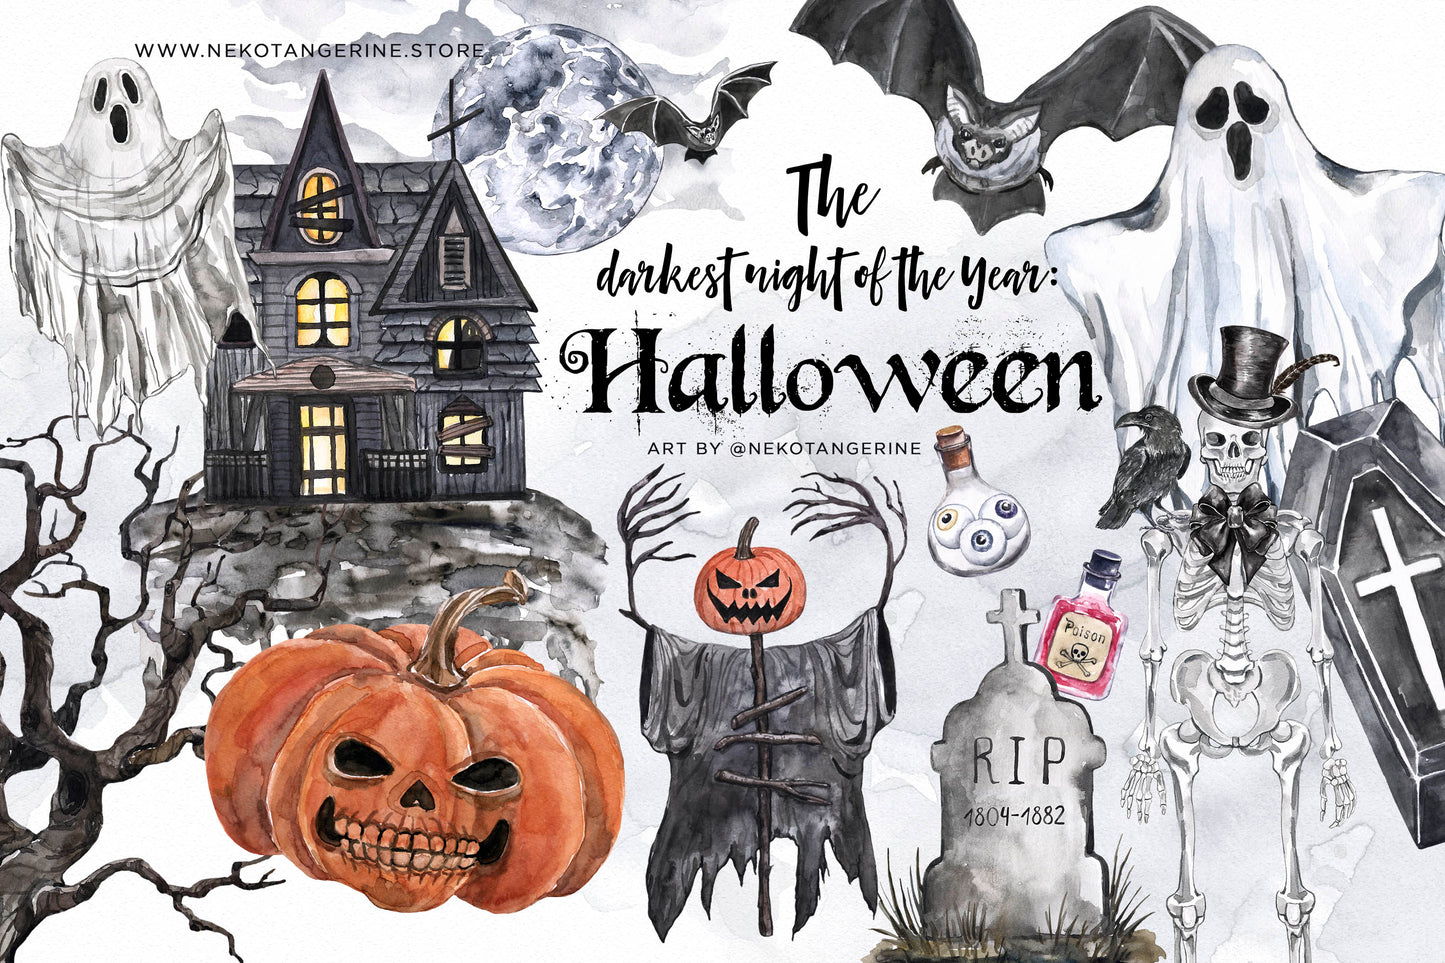 Watercolor Halloween Clipart Vintage Goth Haunted House Ghost Skeleton Skull Bat